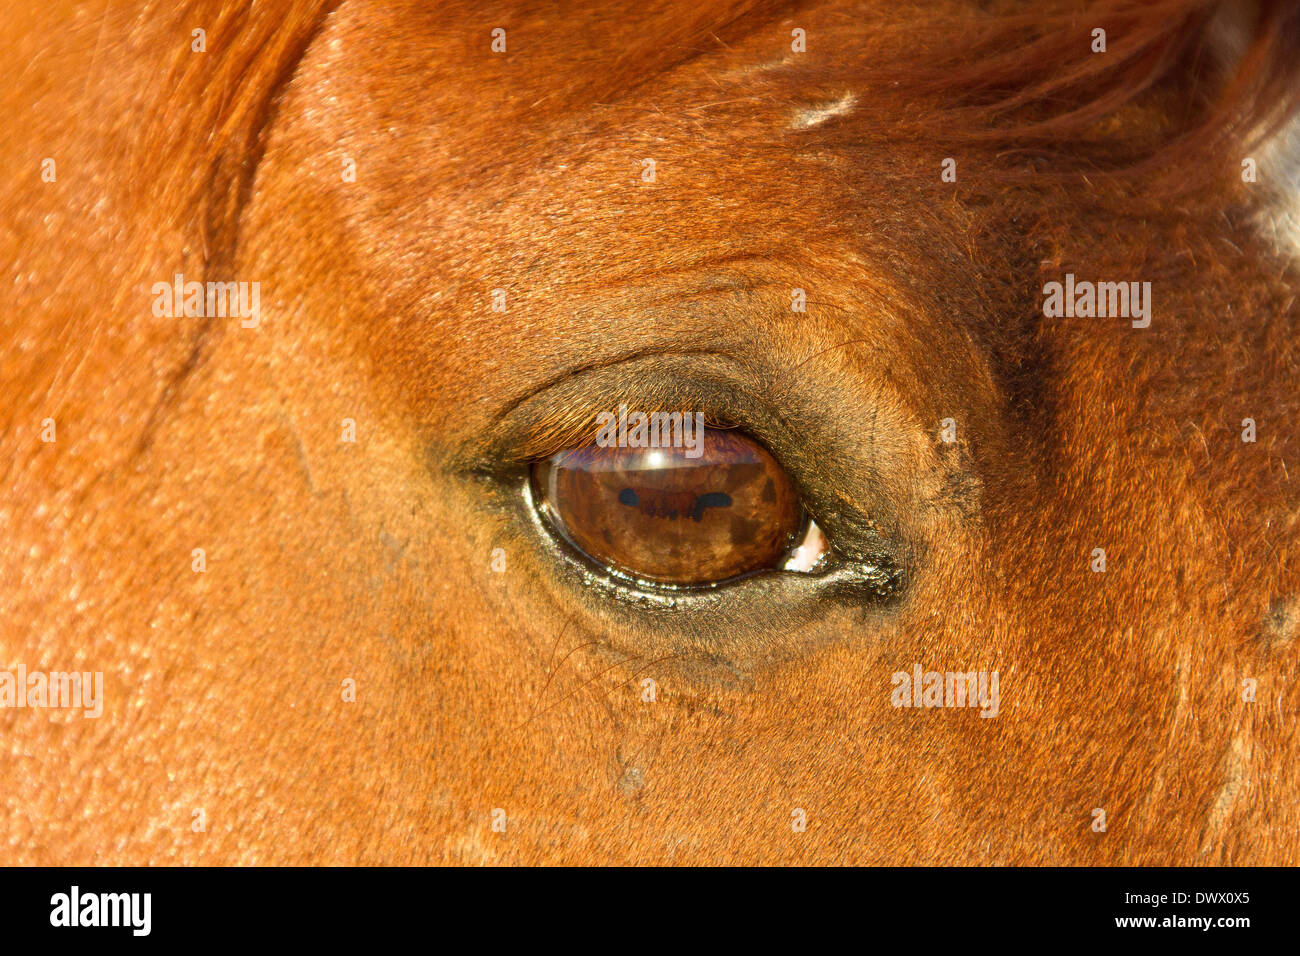 The eye of one of the Wild Horses of the Namib Desert Stock Photo